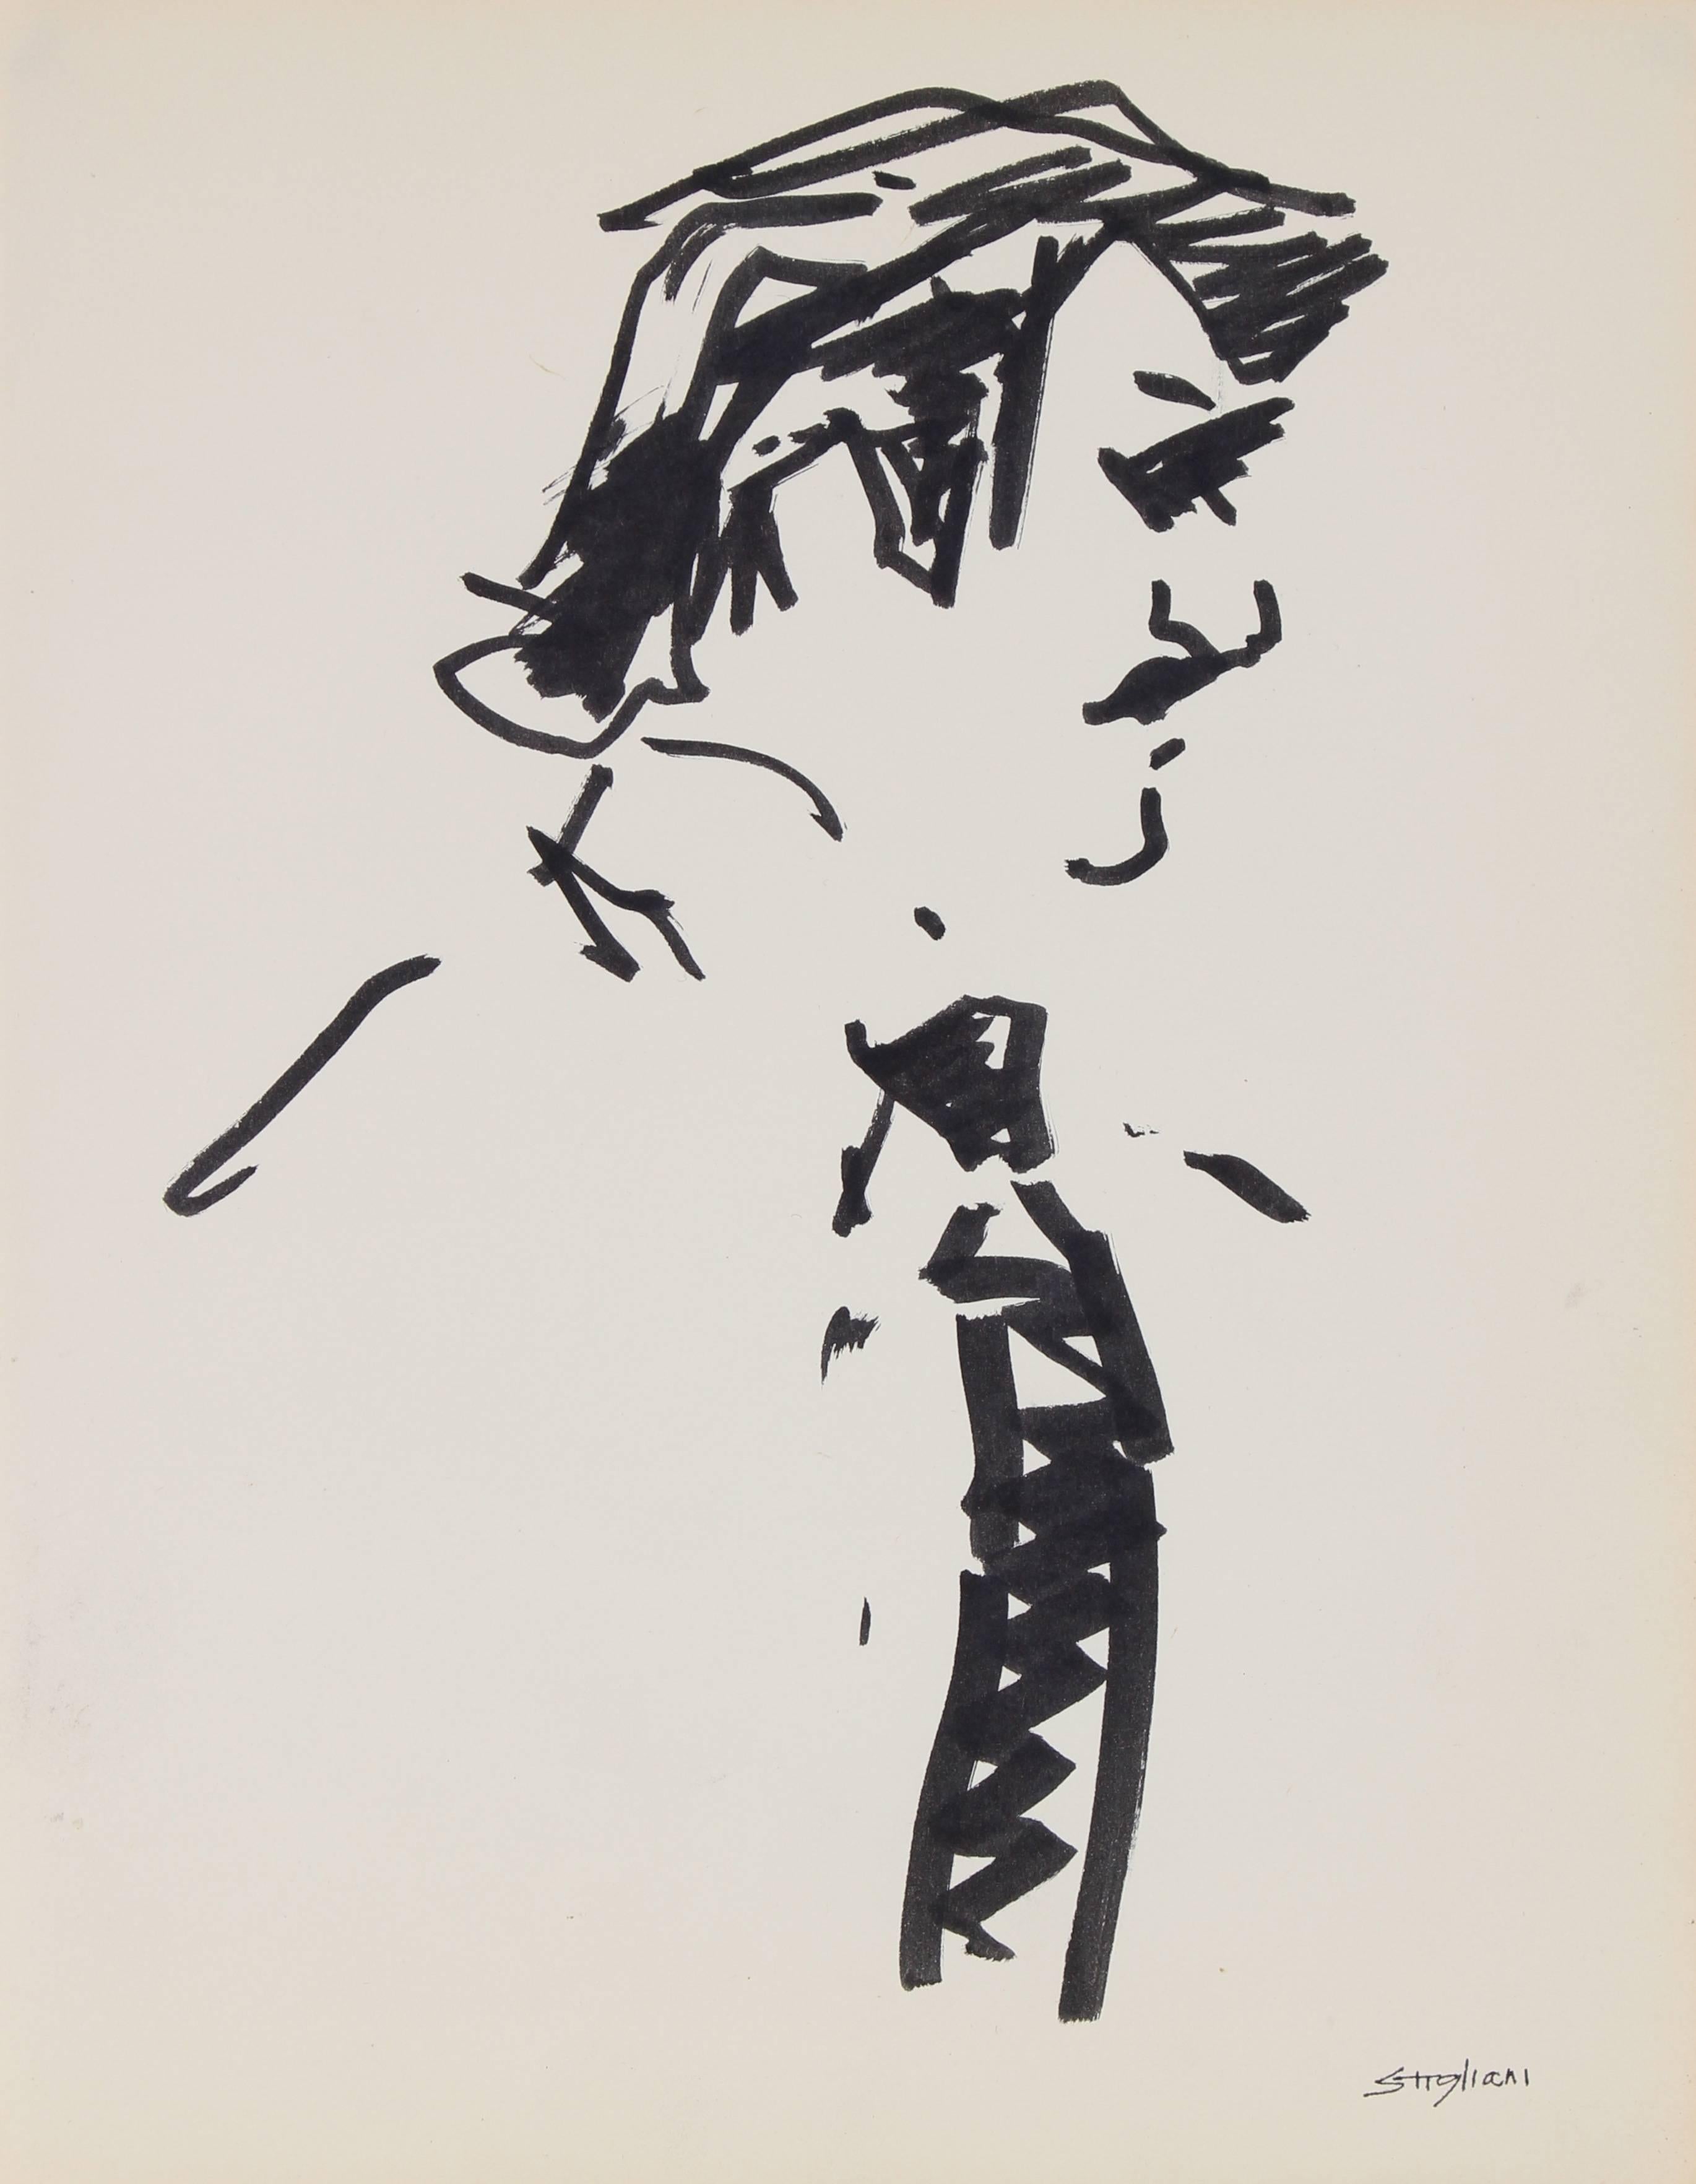 Portrait of a Man in a Tie - Art by Pasquale Patrick Stigliani